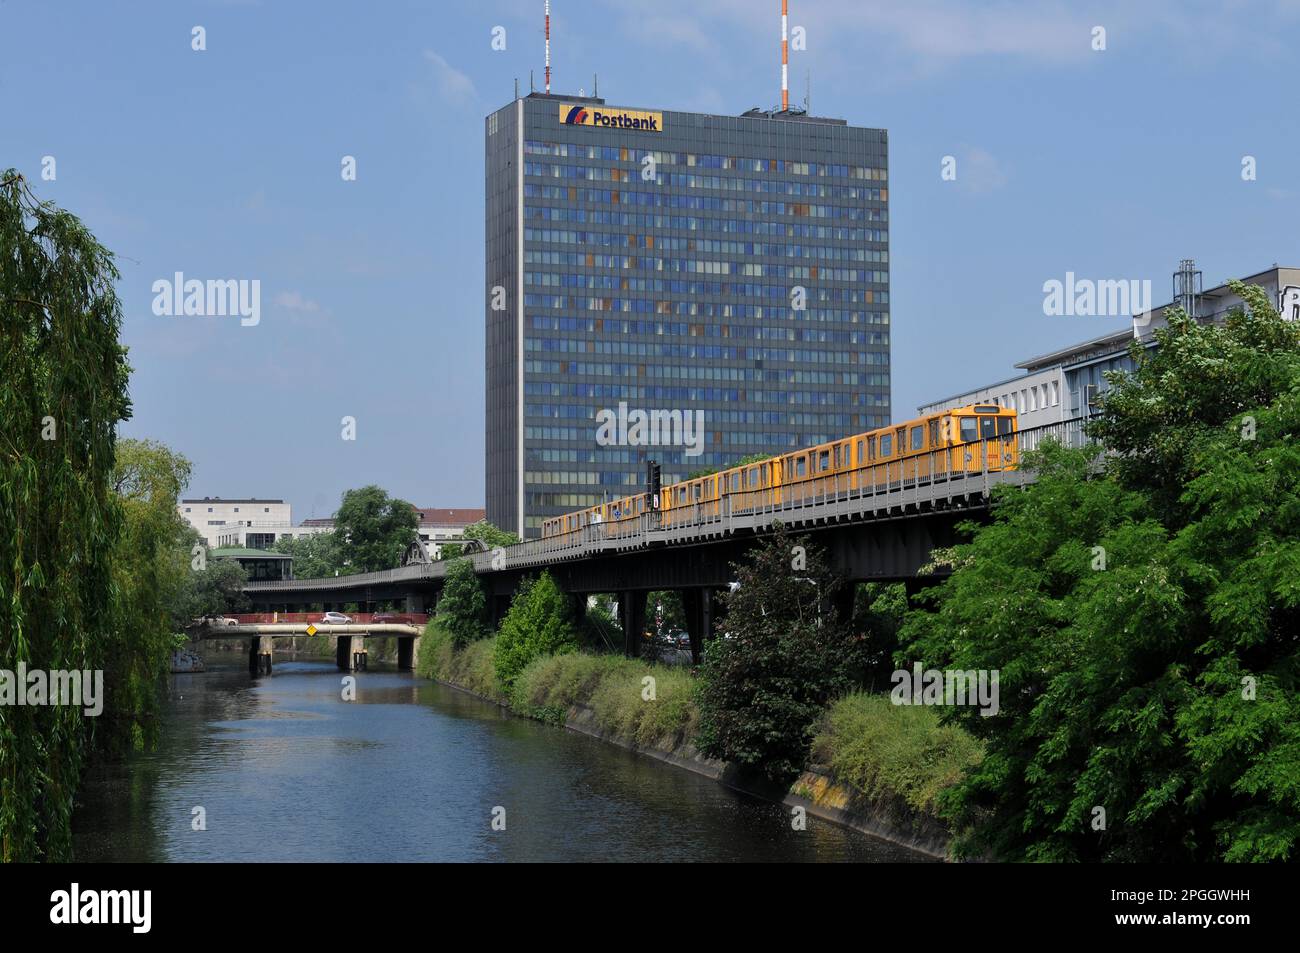 Postbank high-rise, Hallesches Ufer, Kreuzberg, Berlin, Germany Stock Photo